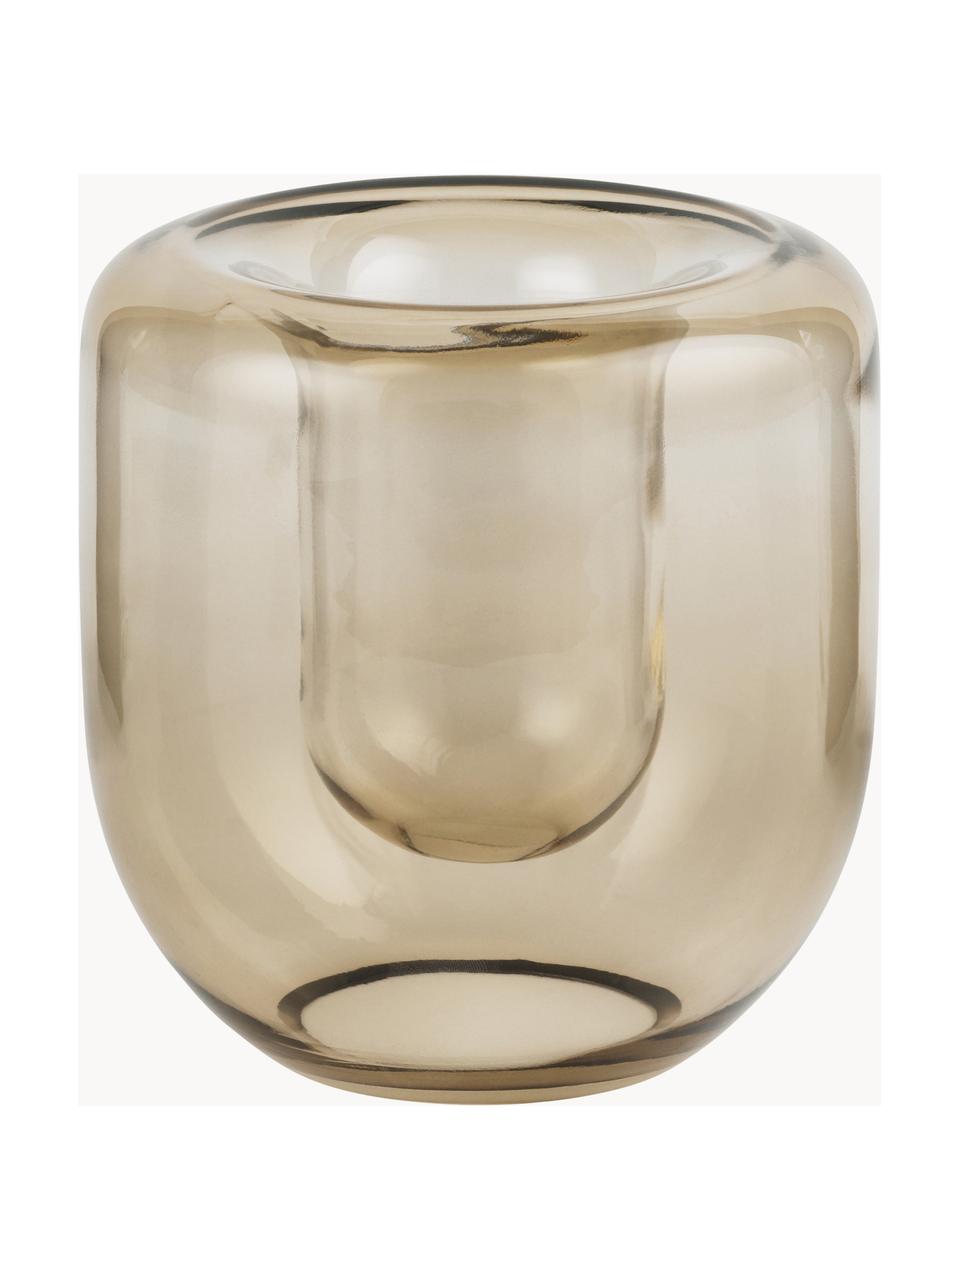 Vaso in vetro soffiato Opal, alt. 16 cm, Vetro soffiato, Beige trasparente, Ø 14 x Alt. 16 cm